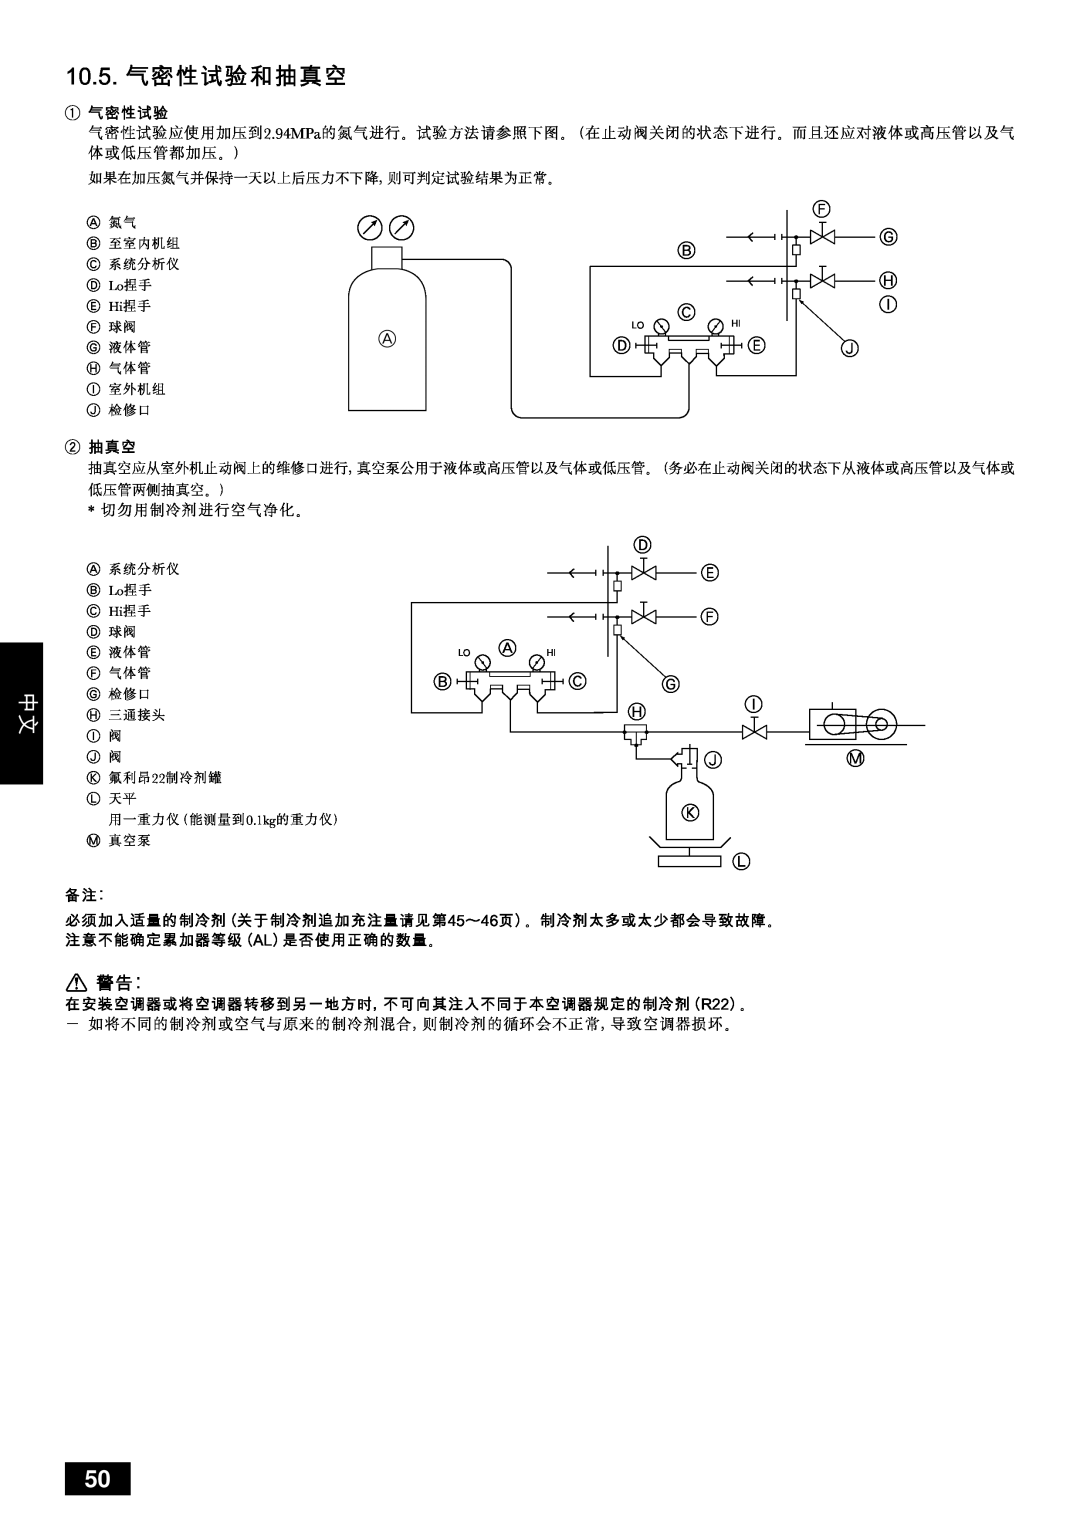 Mitsubishi Electronics PUHY-YMC installation manual Nmkrk=, B C D iç E eá F G H I J, A B iç C eá D E F G H I J K OO L 